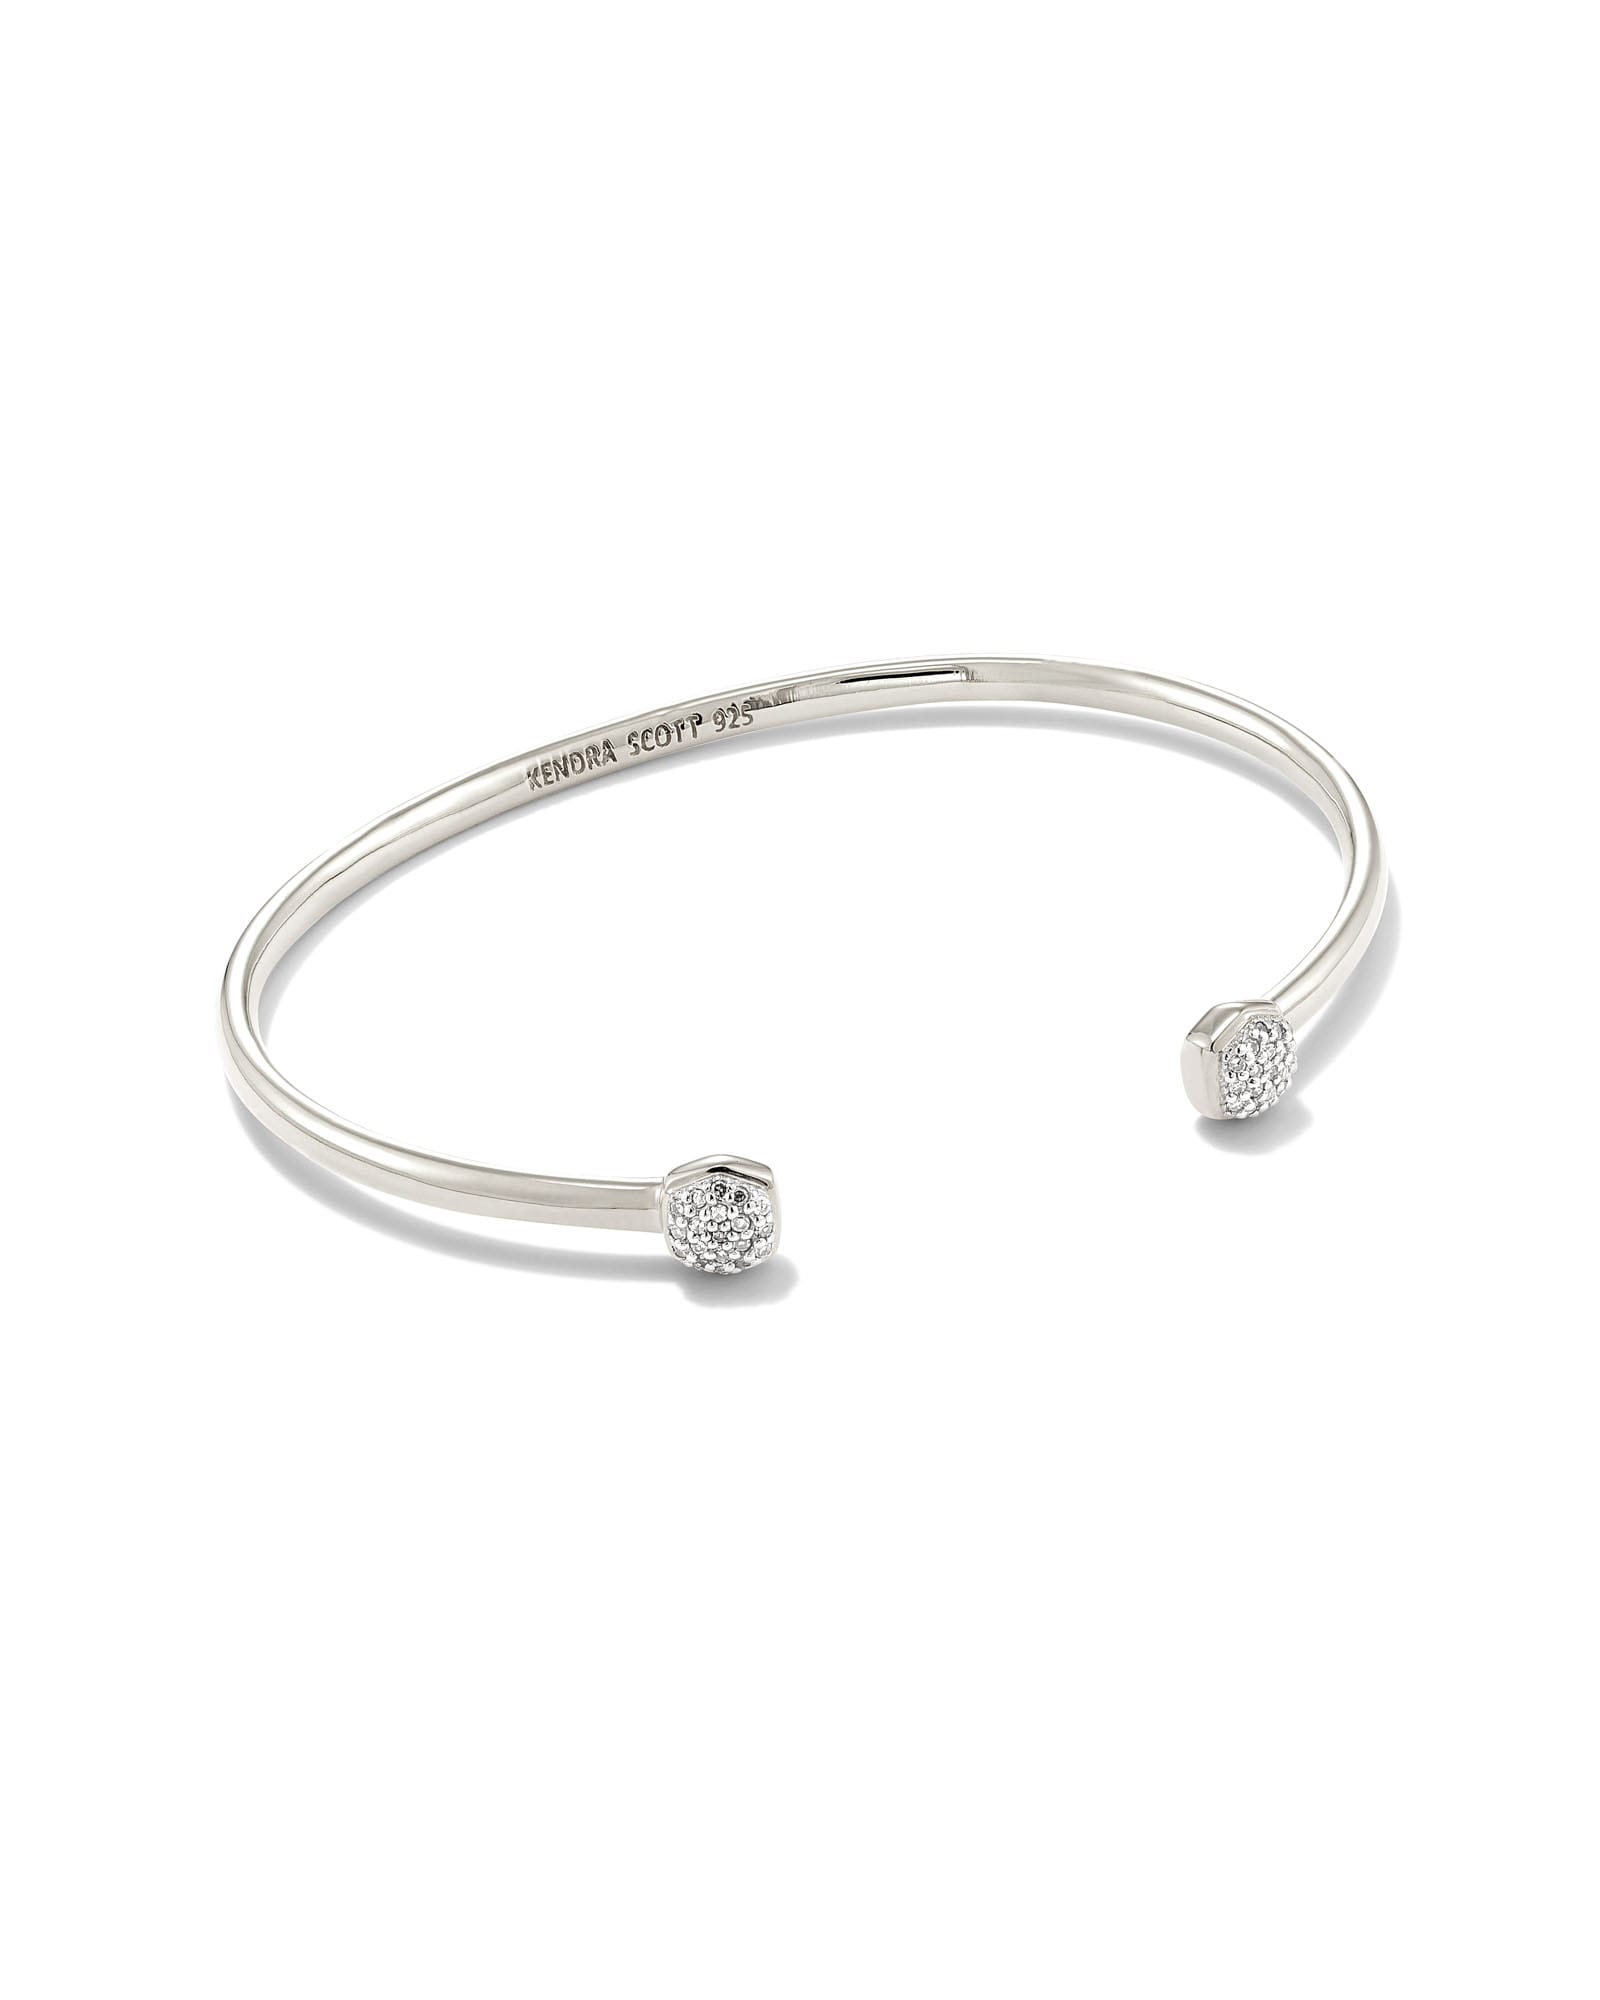 Kendra Scott Davie Sterling Silver Double Diamond Cuff Bracelet in White Diamond | Diamonds